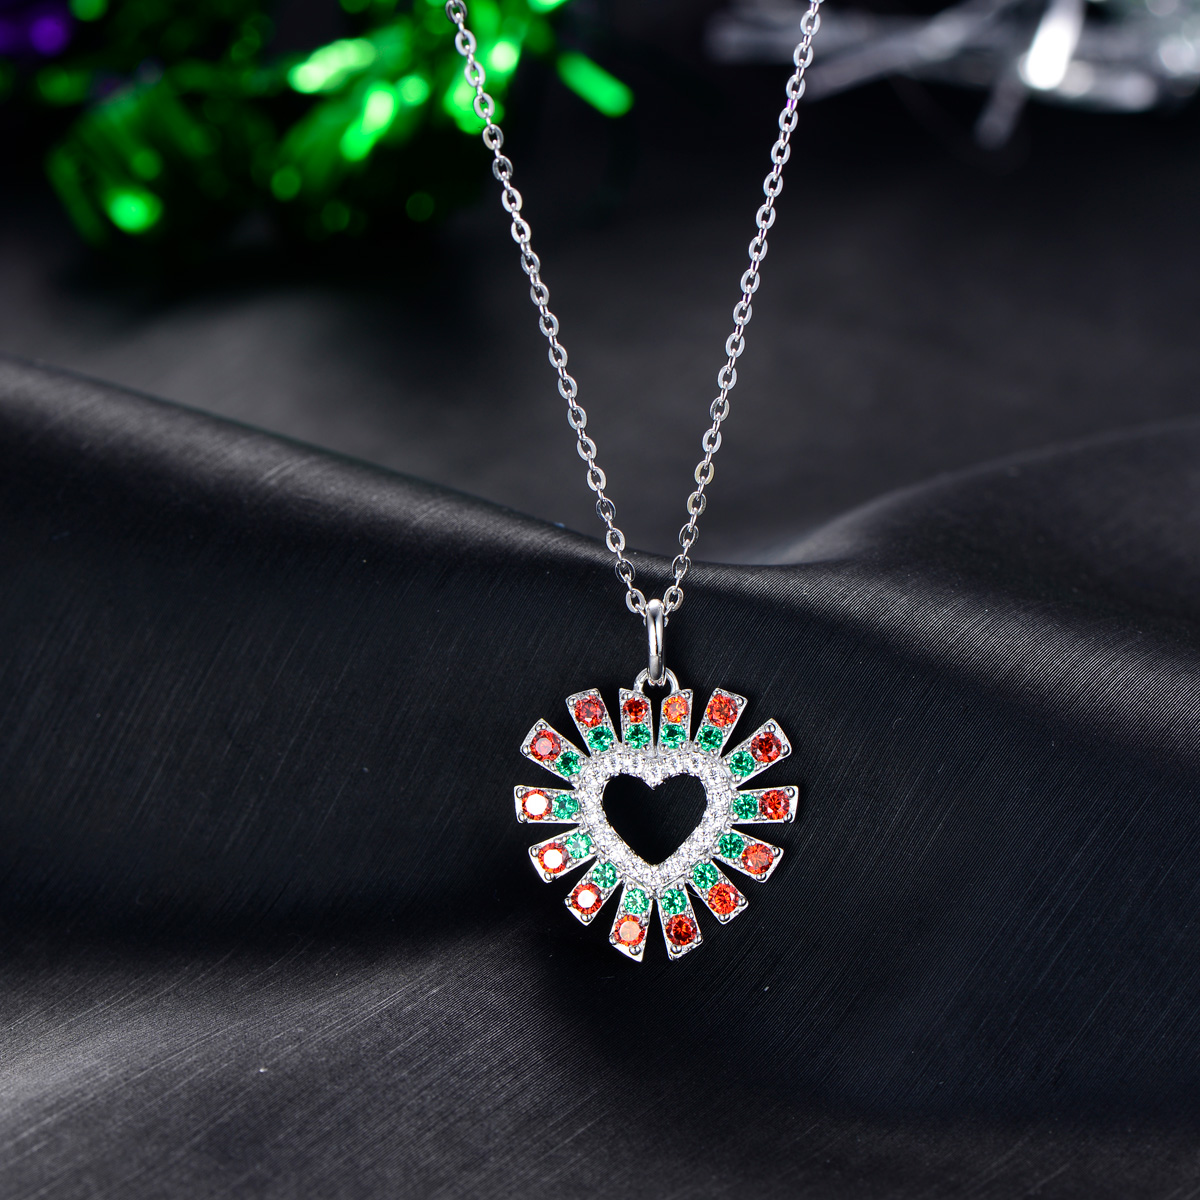 Christmas heart pendant necklace